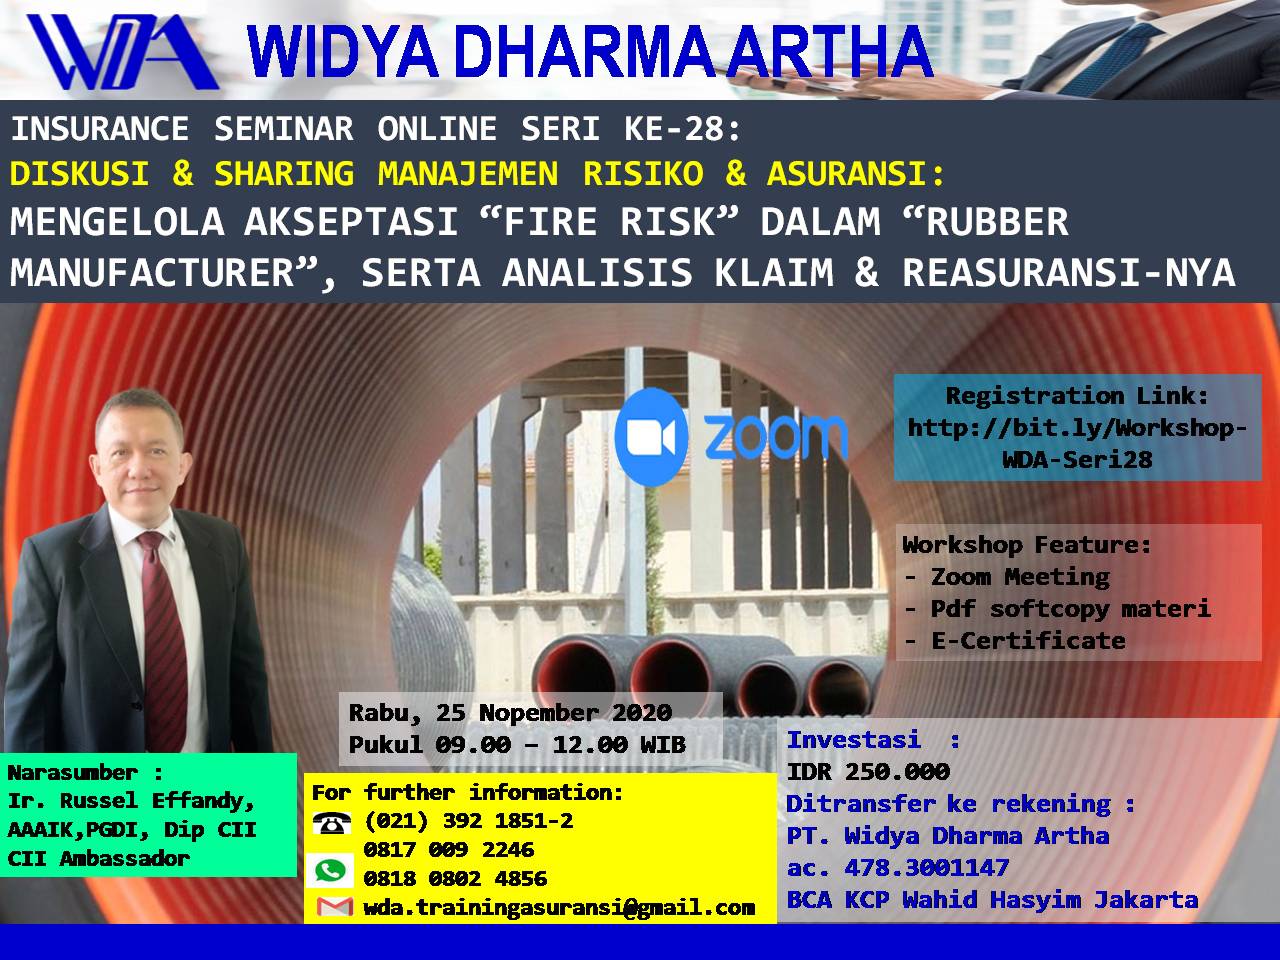 wda-rubber-manufacturer-risks-and-insurance-25-11-2020